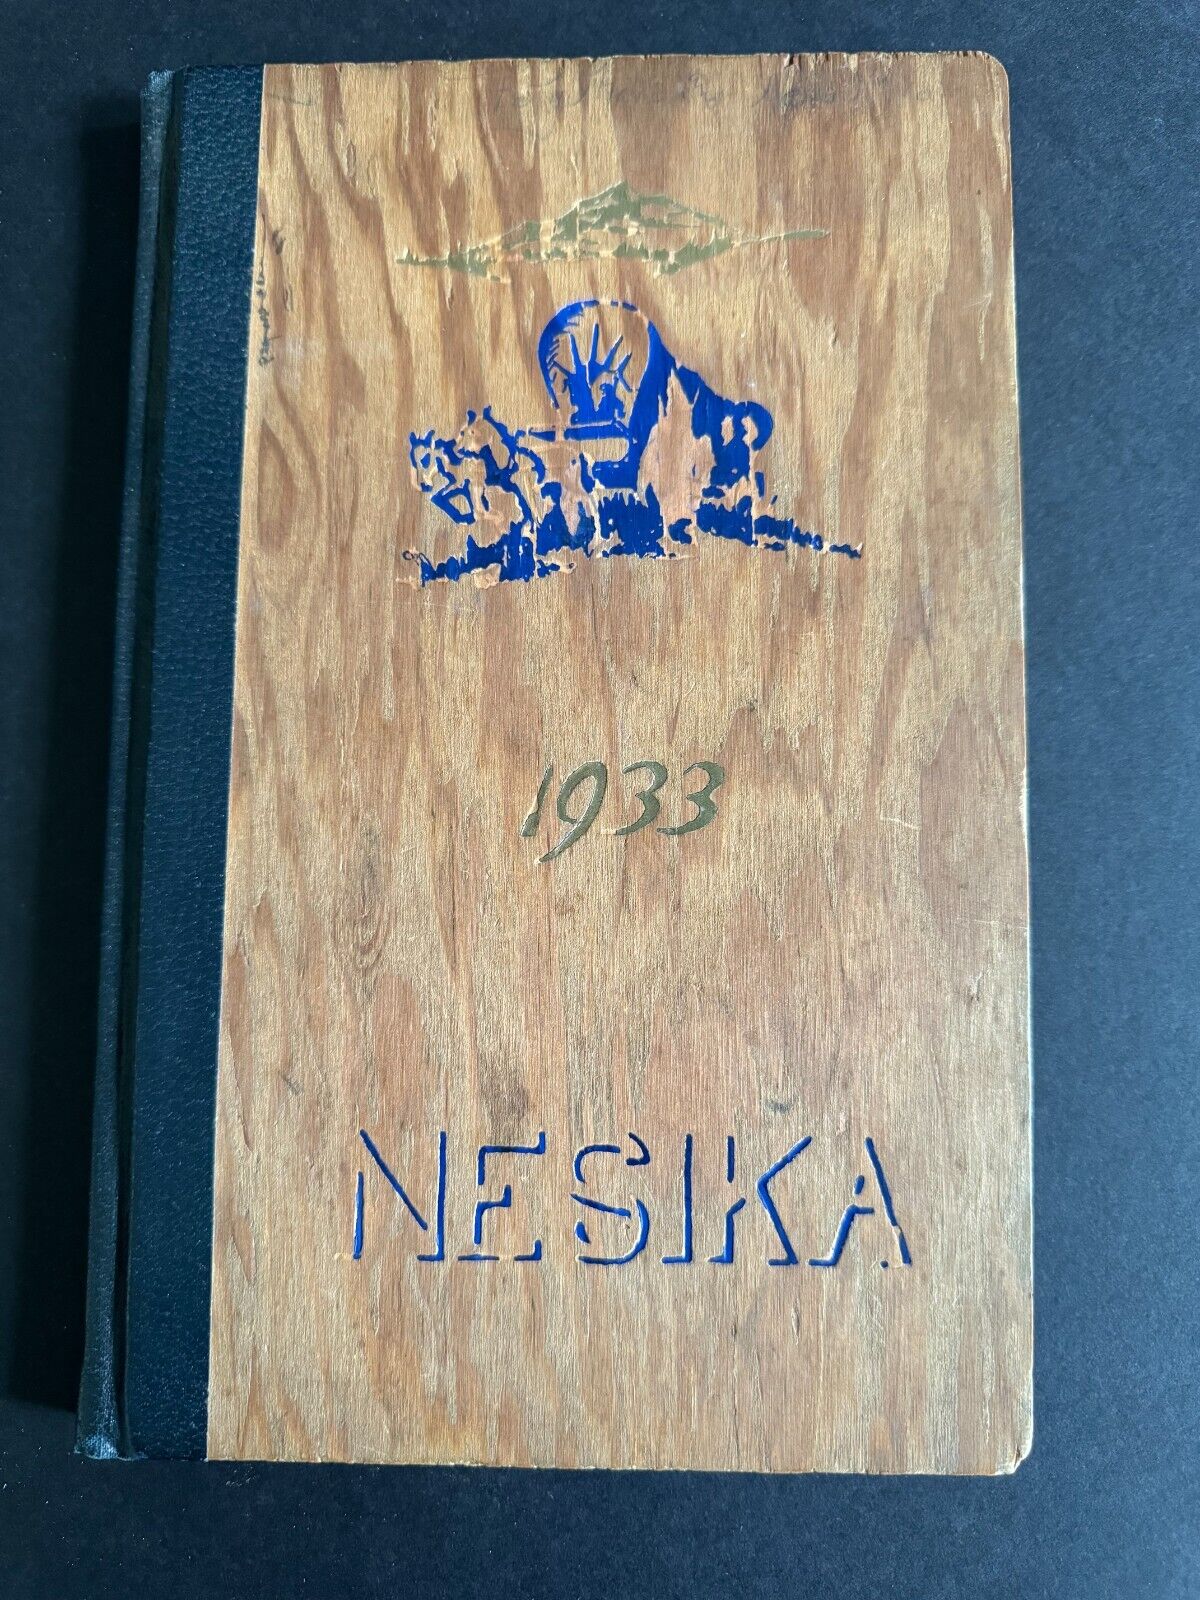 1933 Everett High School - Nesika Yearbook - Everett, Washington - Wooden Cover